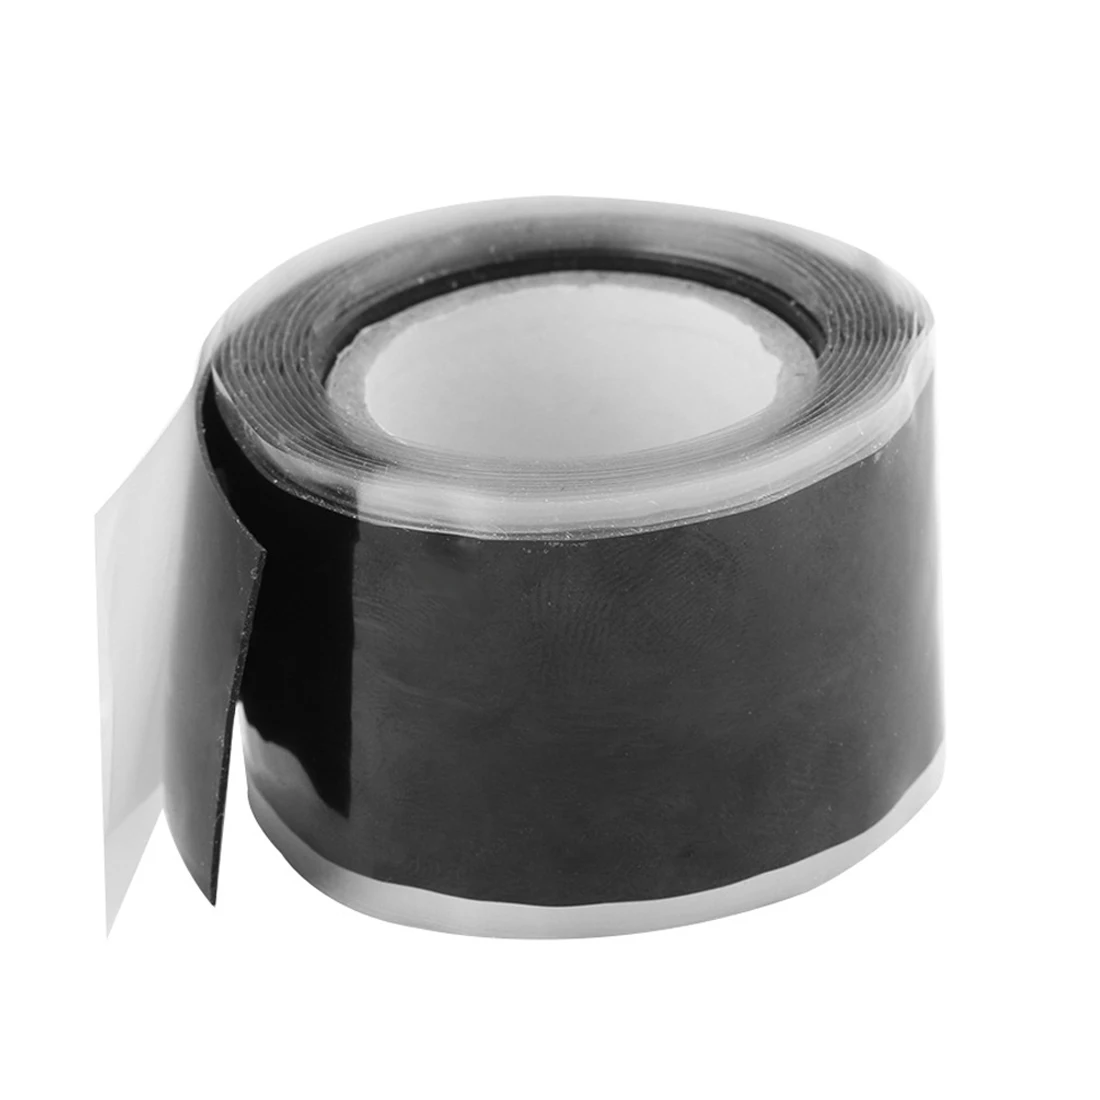 New Self-Adhesive Repairs Waterproof Tape Rubber Bonding Self Fusing Wire Black 